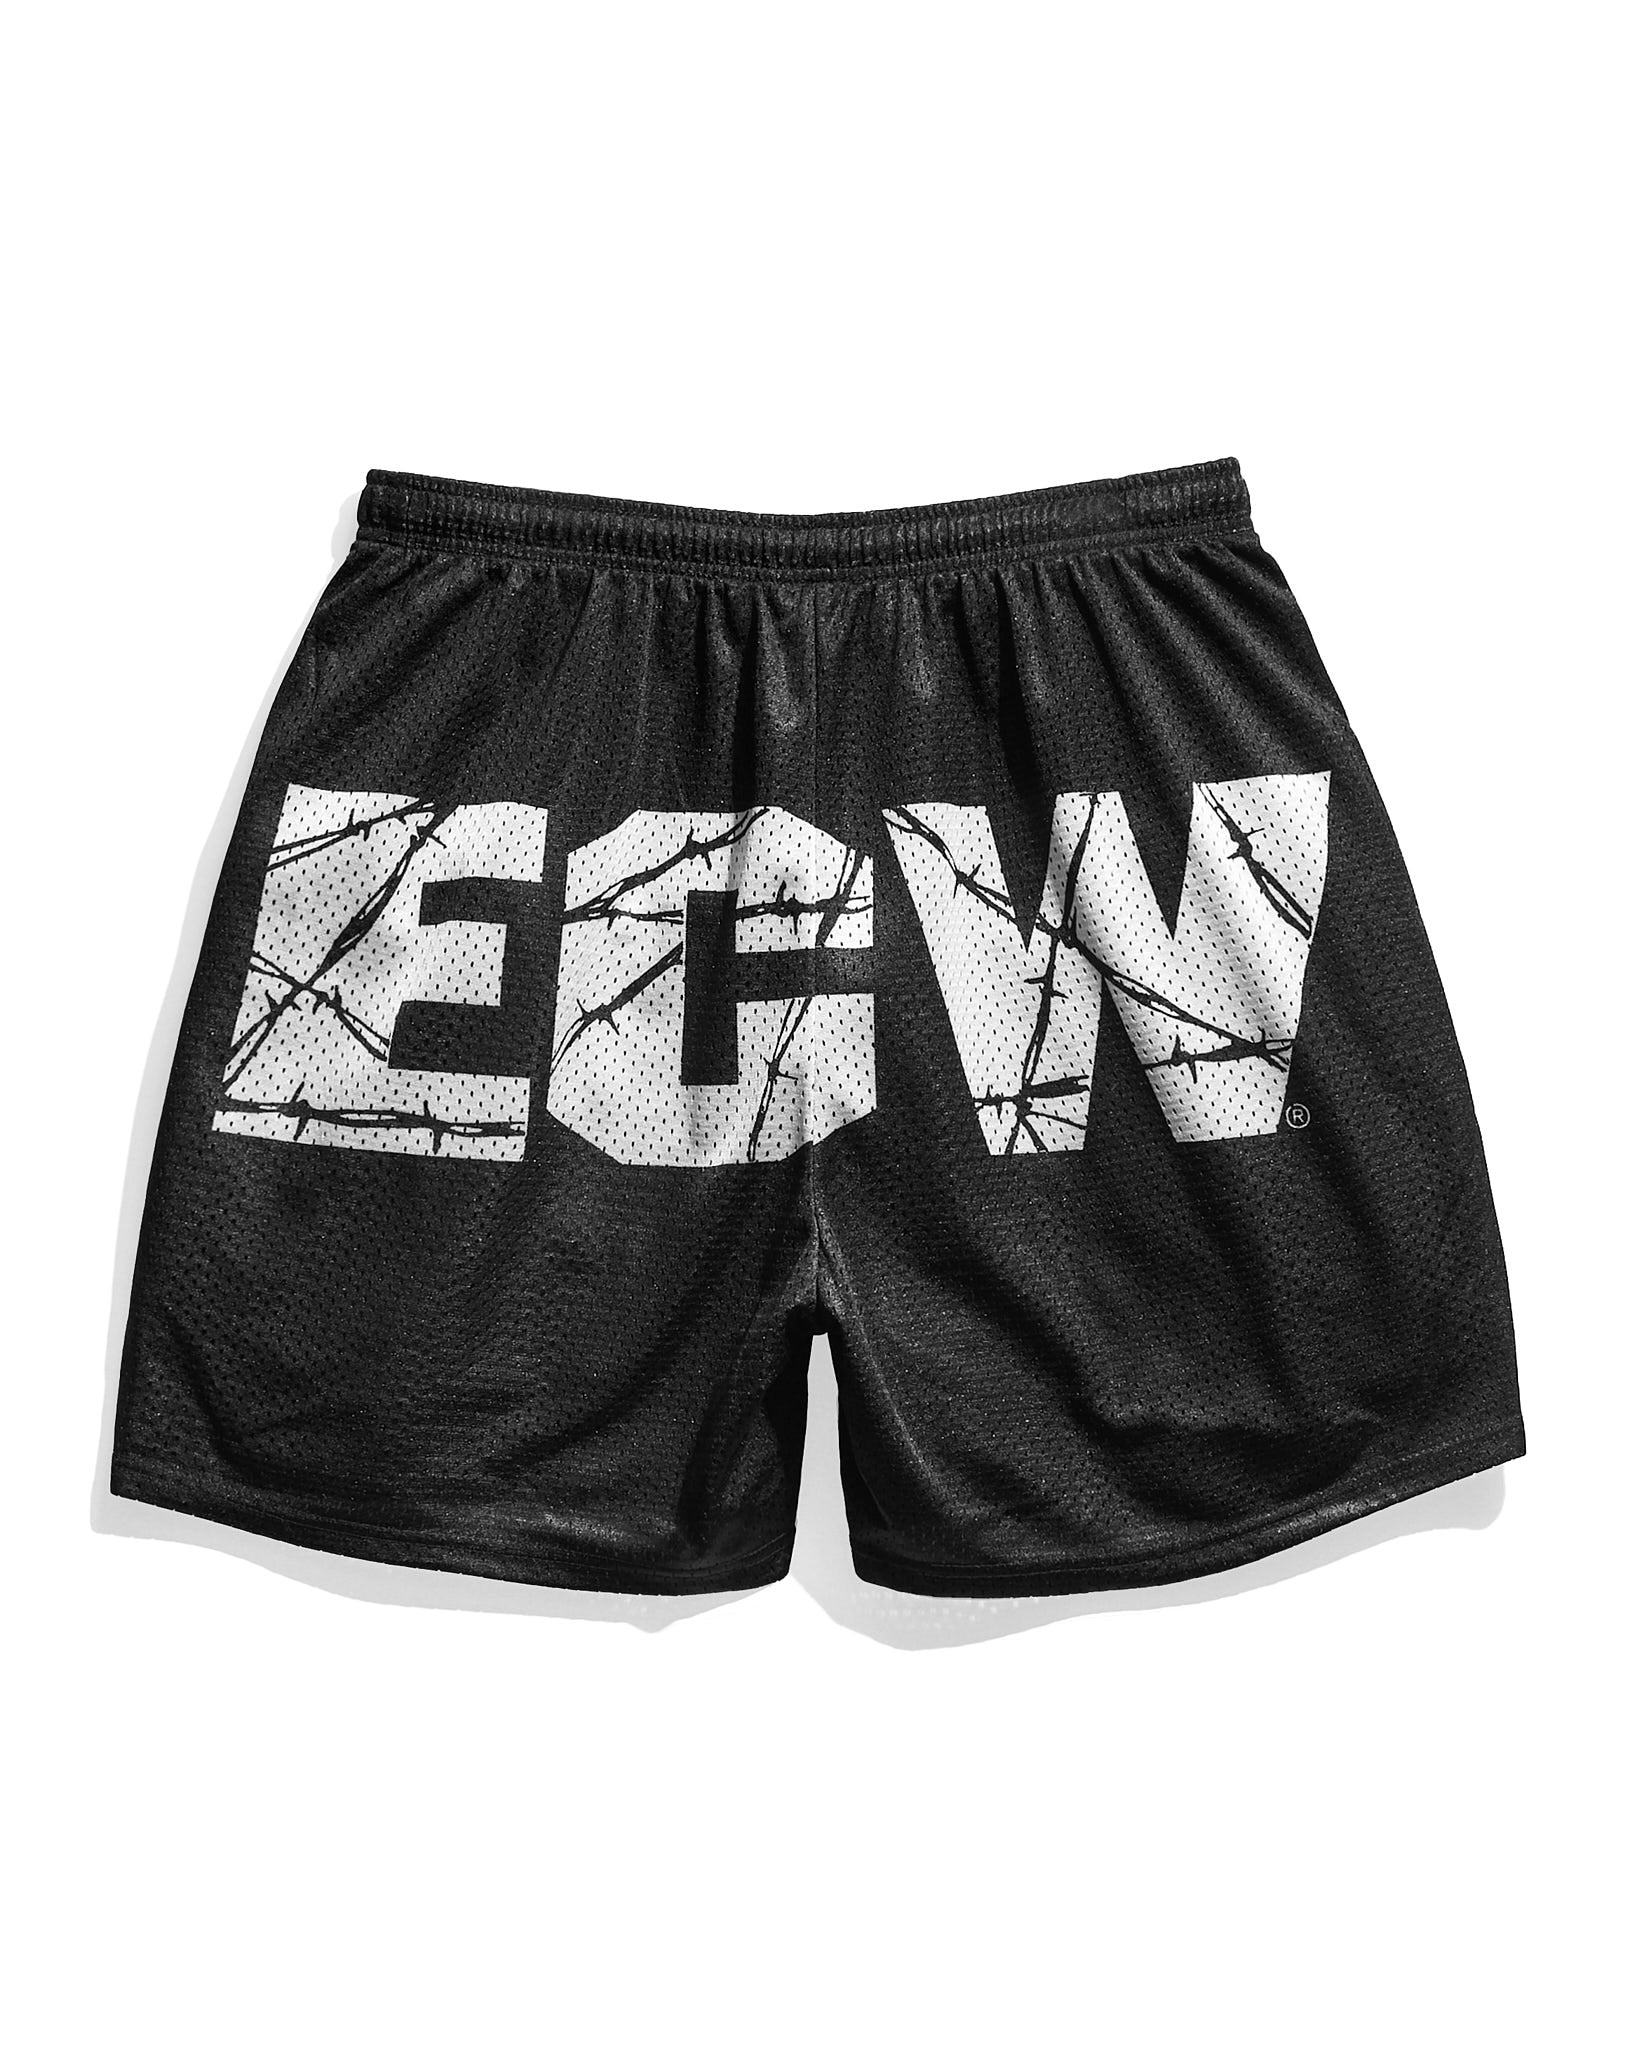 ECW Black Logo Retro Shorts